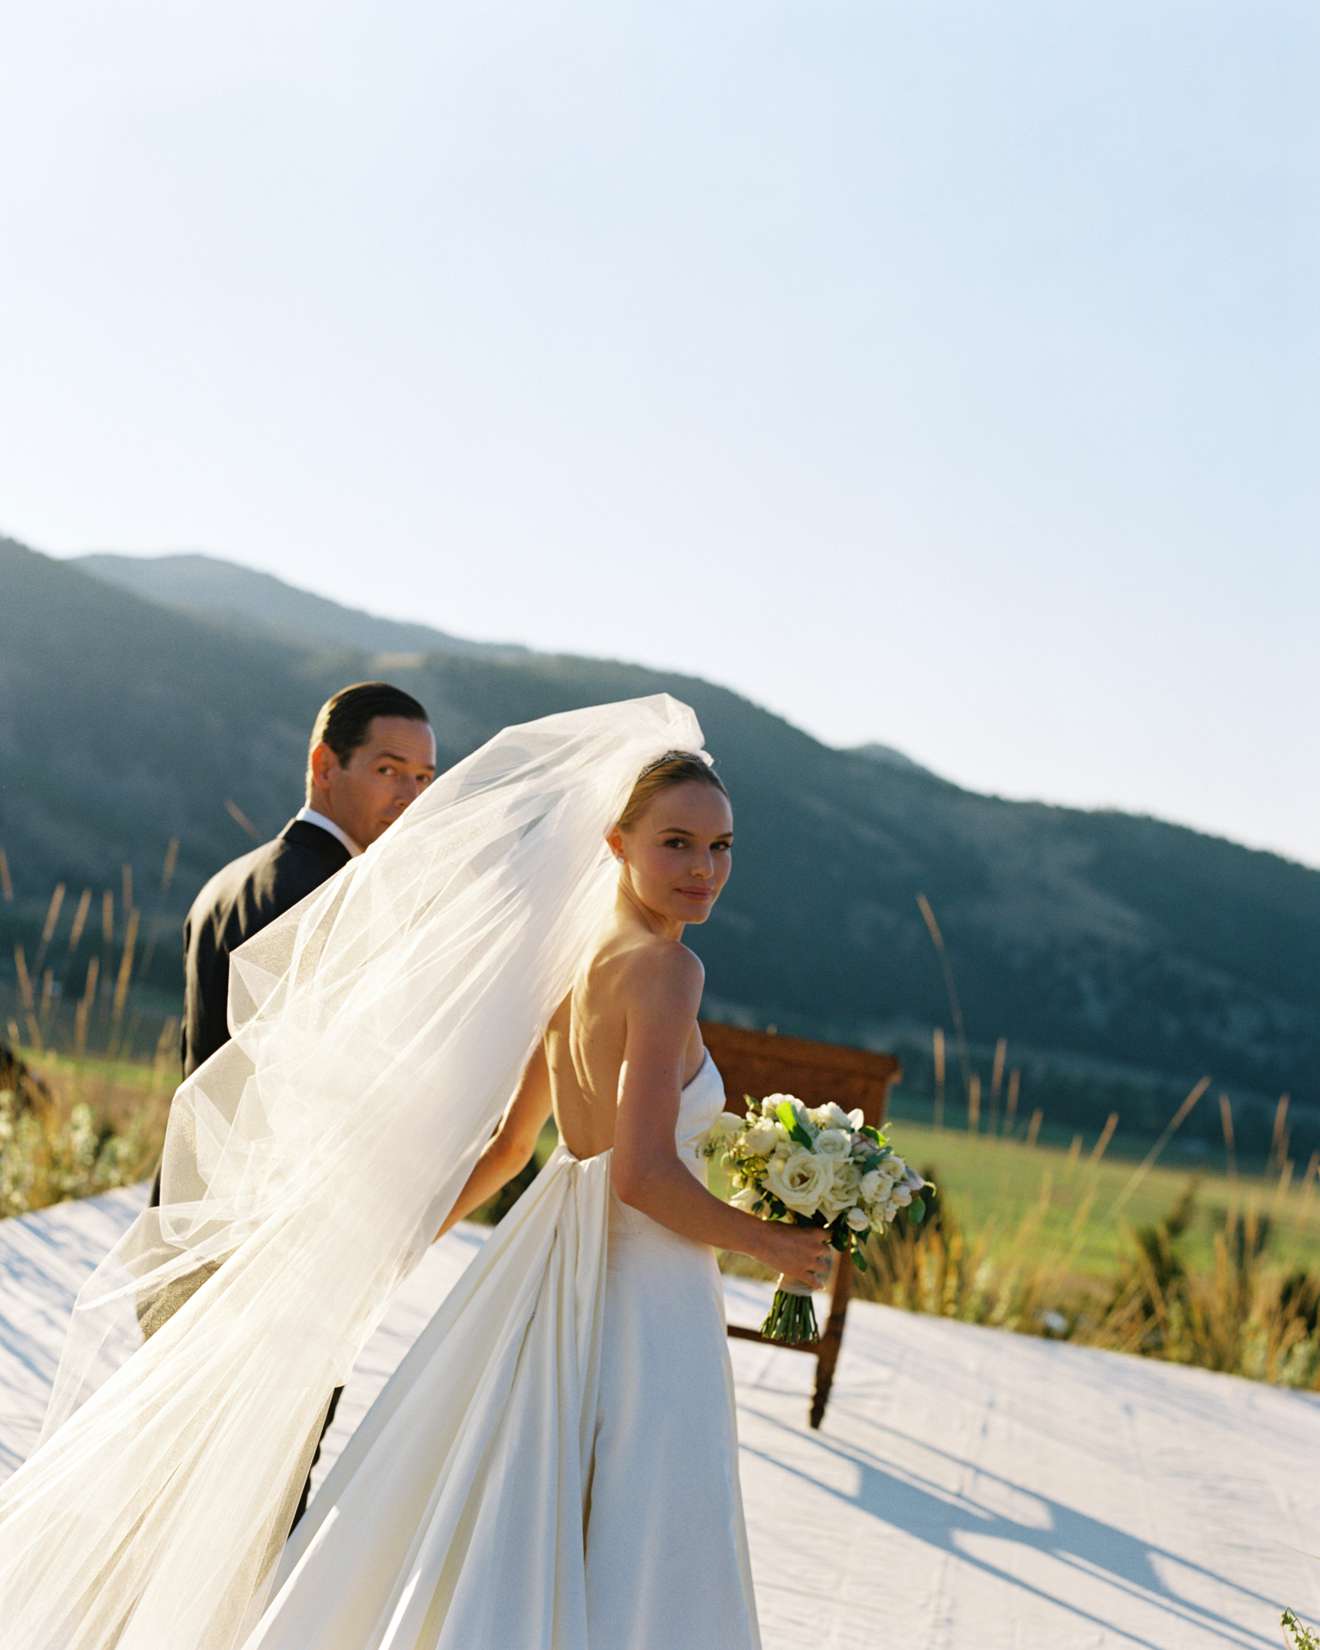 kate-bosworth-wedding-gown-0214.jpg